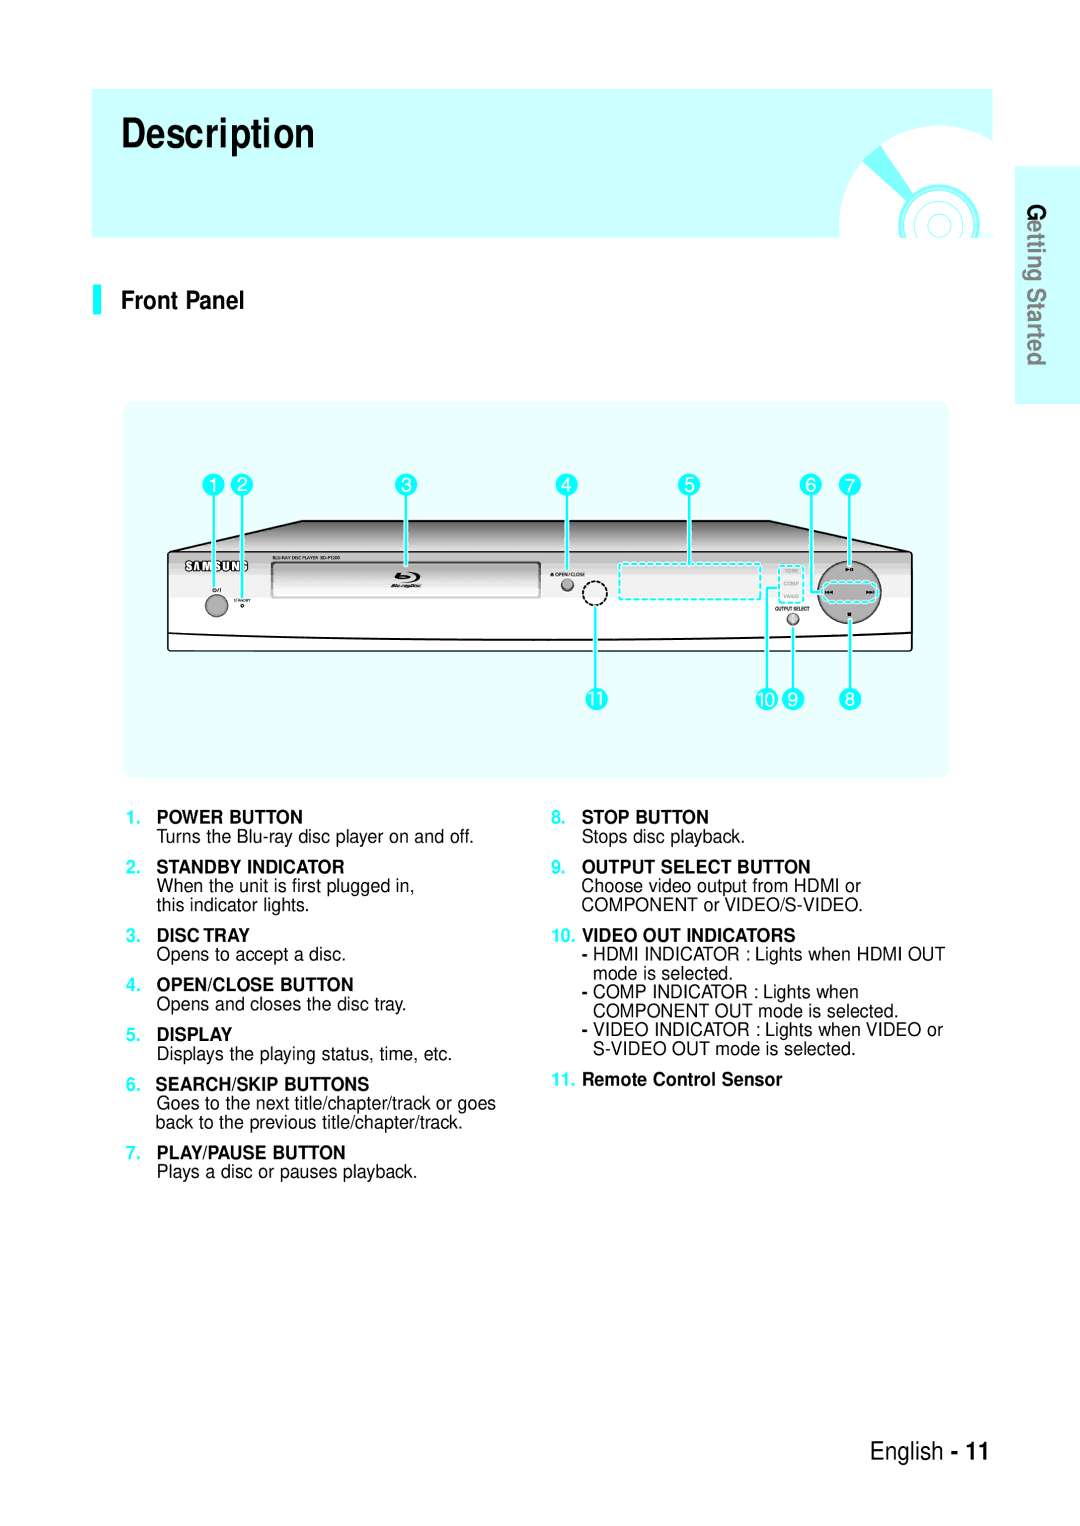 Samsung BD-P1200 manual Description, Front Panel, OPEN/CLOSE Button Opens and closes the disc tray, Remote Control Sensor 